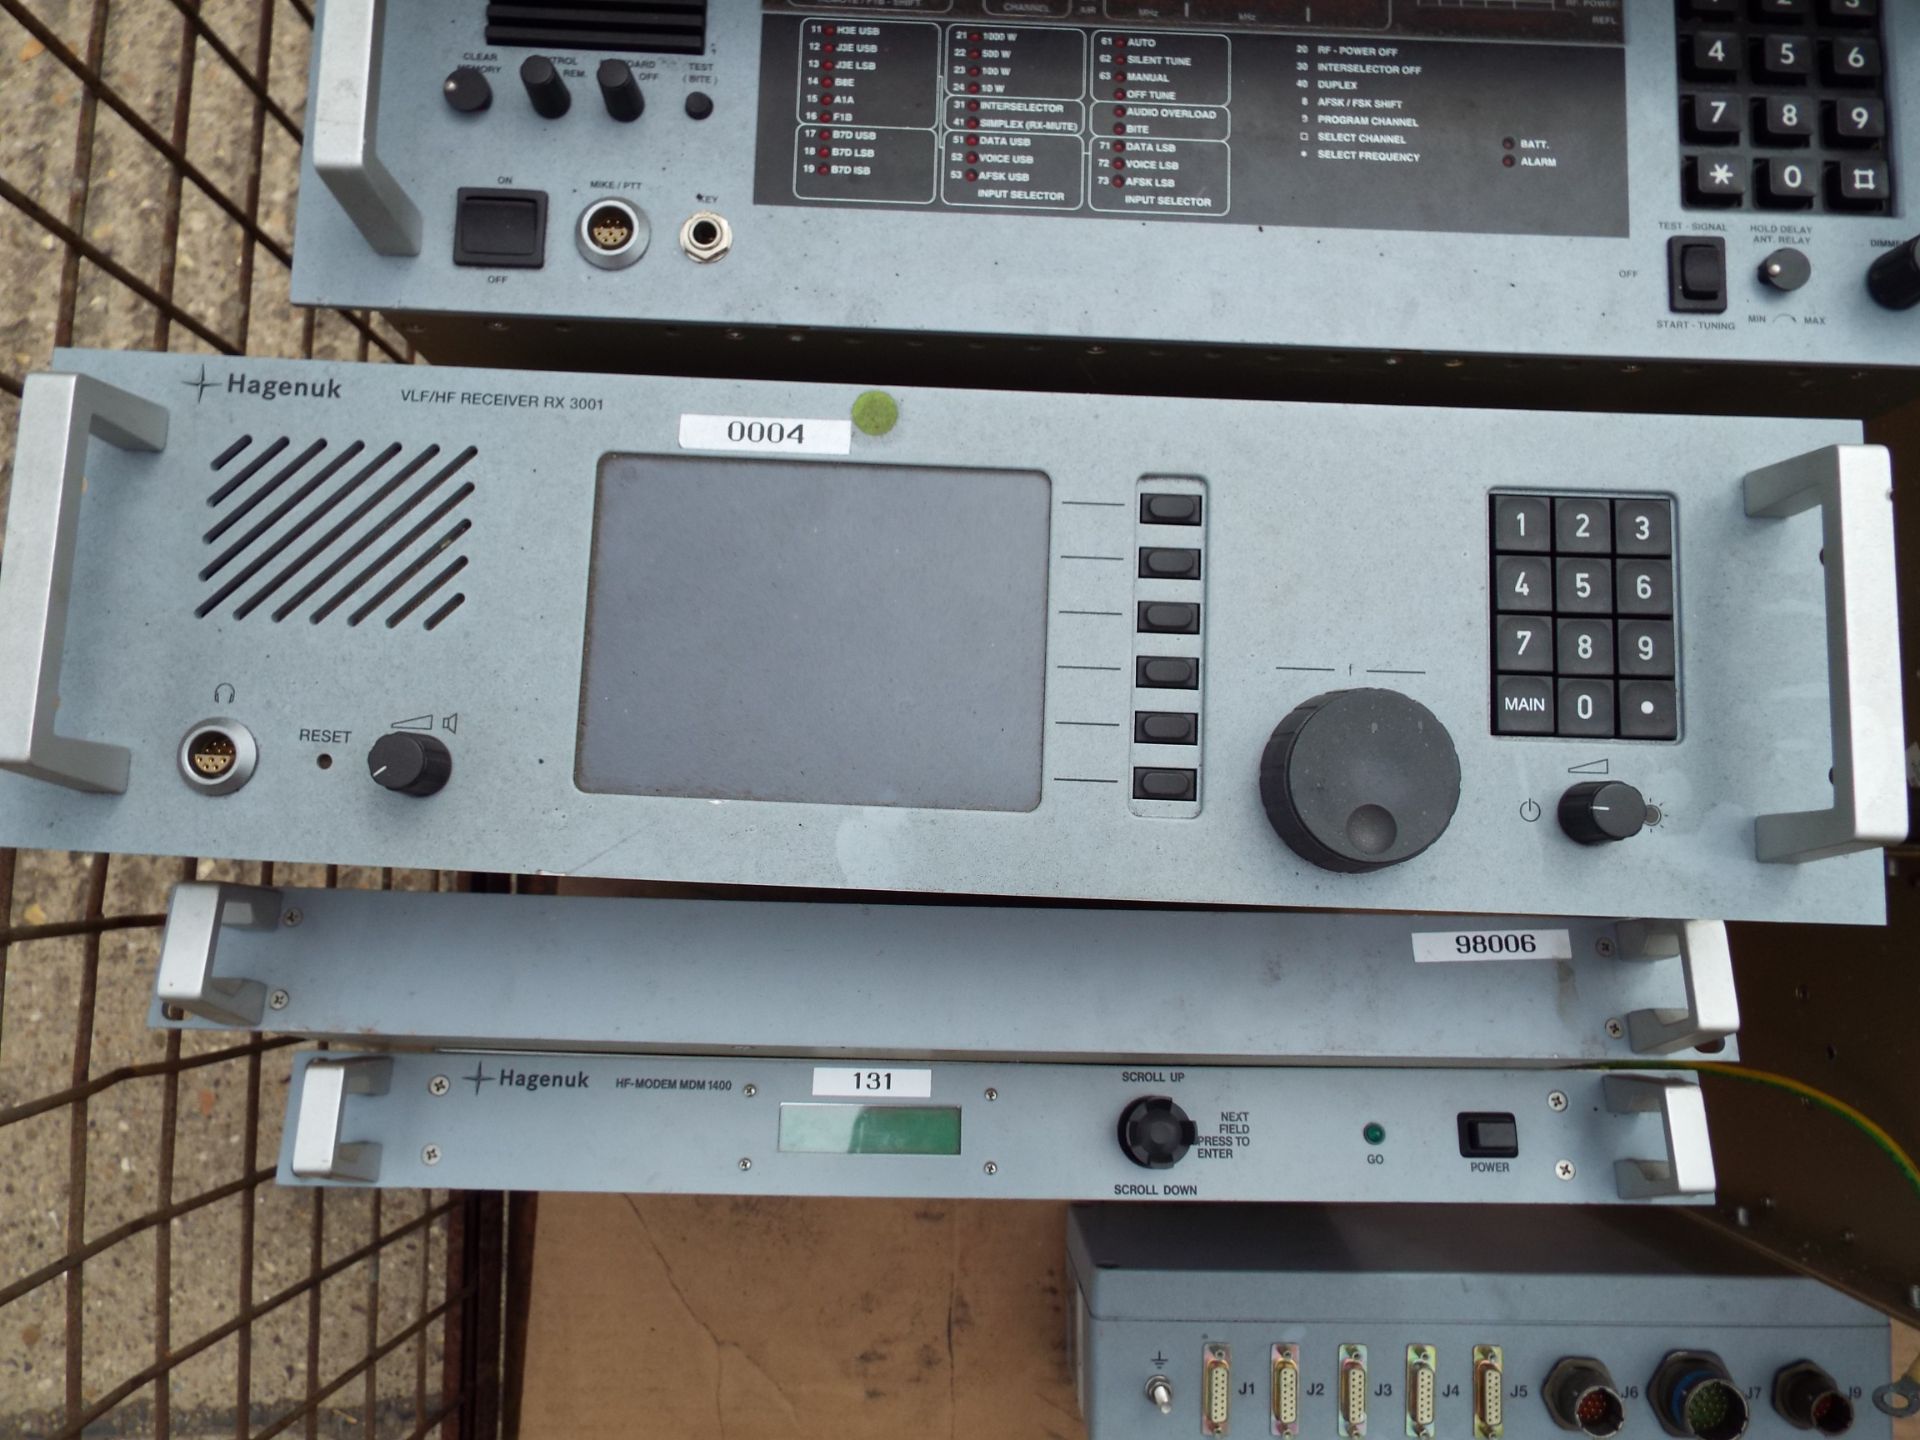 Mixed Stillage of Hagenuk Radio Equipment consisting of ICU, Transmitter, Receiver, Amplifier etc - Image 5 of 10